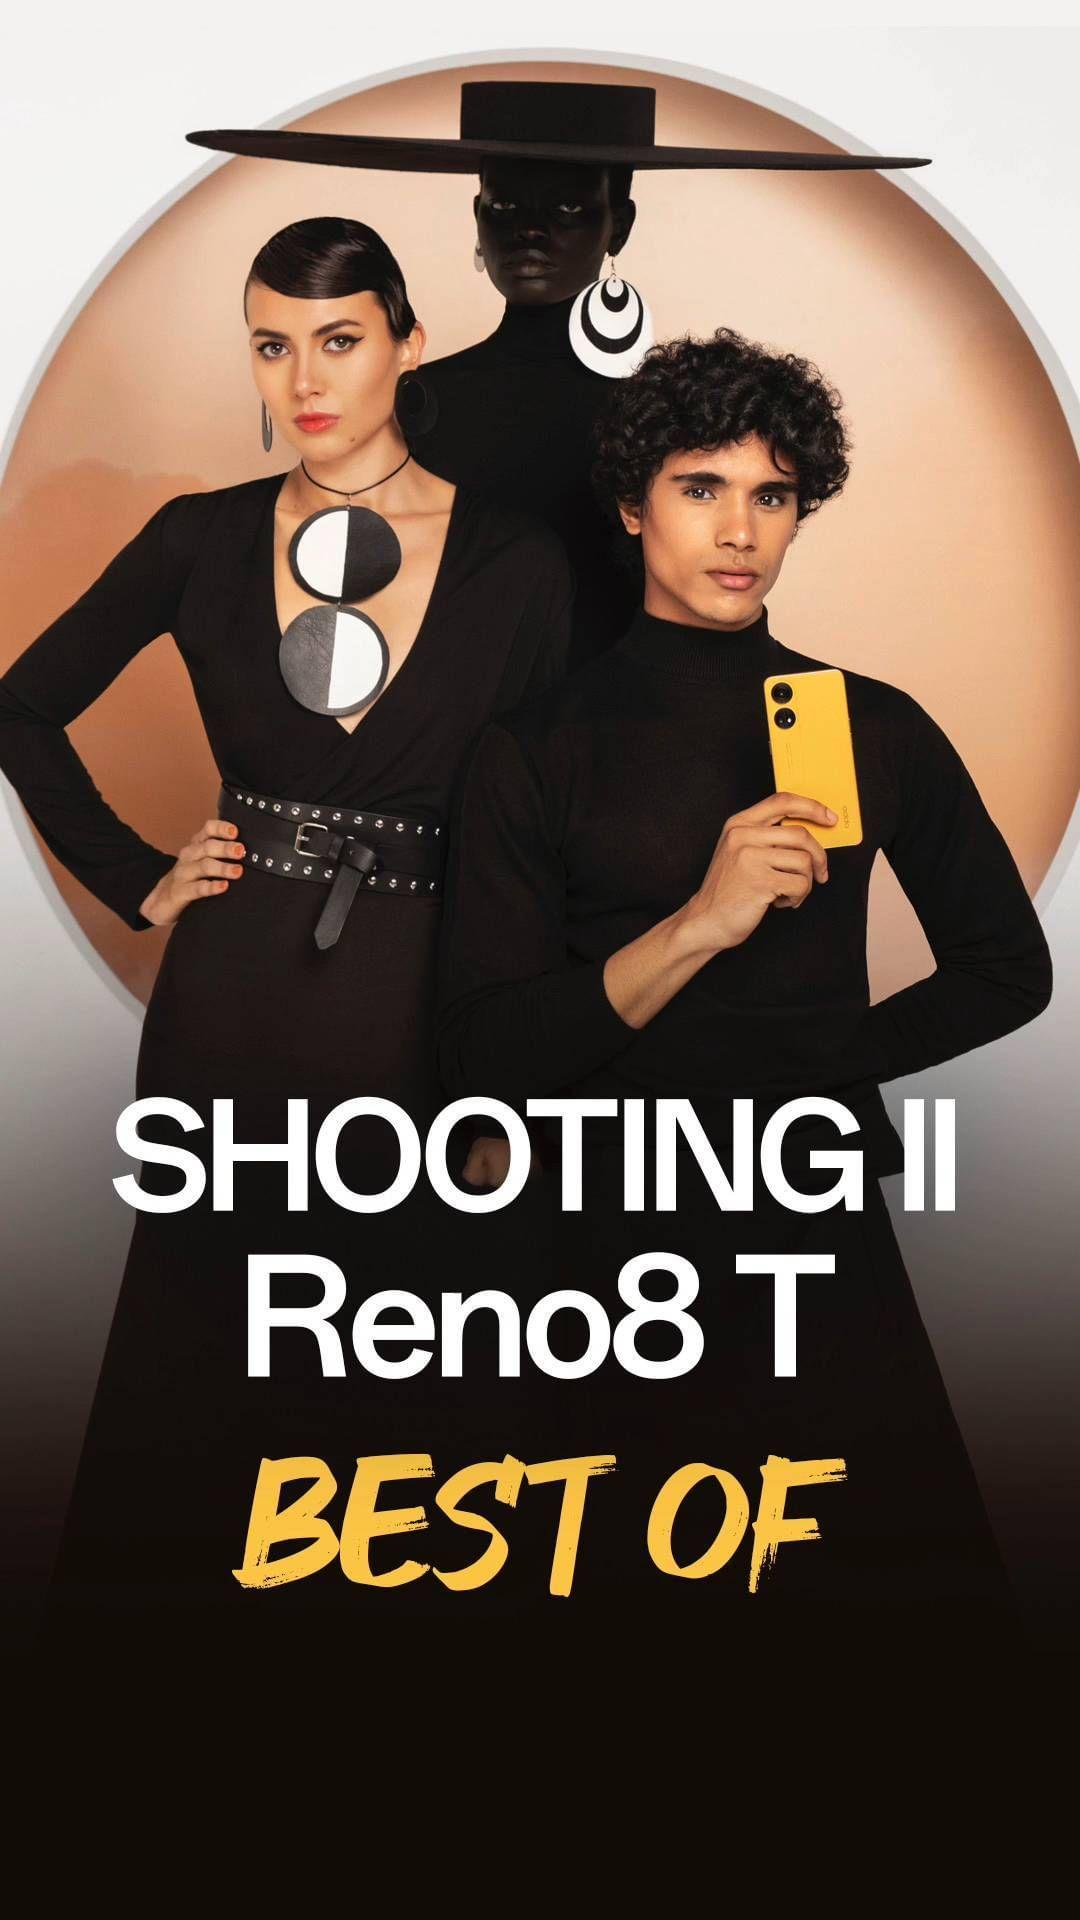 class="content__text"
 Retour sur les coulisses de notre dernier shooting caméra shapes OPPO Reno8 T…
Stay tuned for more 🔥
 
 #OPPO #Reno8T #PortraitExpert #Smartphone #Technology #Maroc #ComingSoon #Design #Fashion #Lifestyle #Cuir #tendance 
 